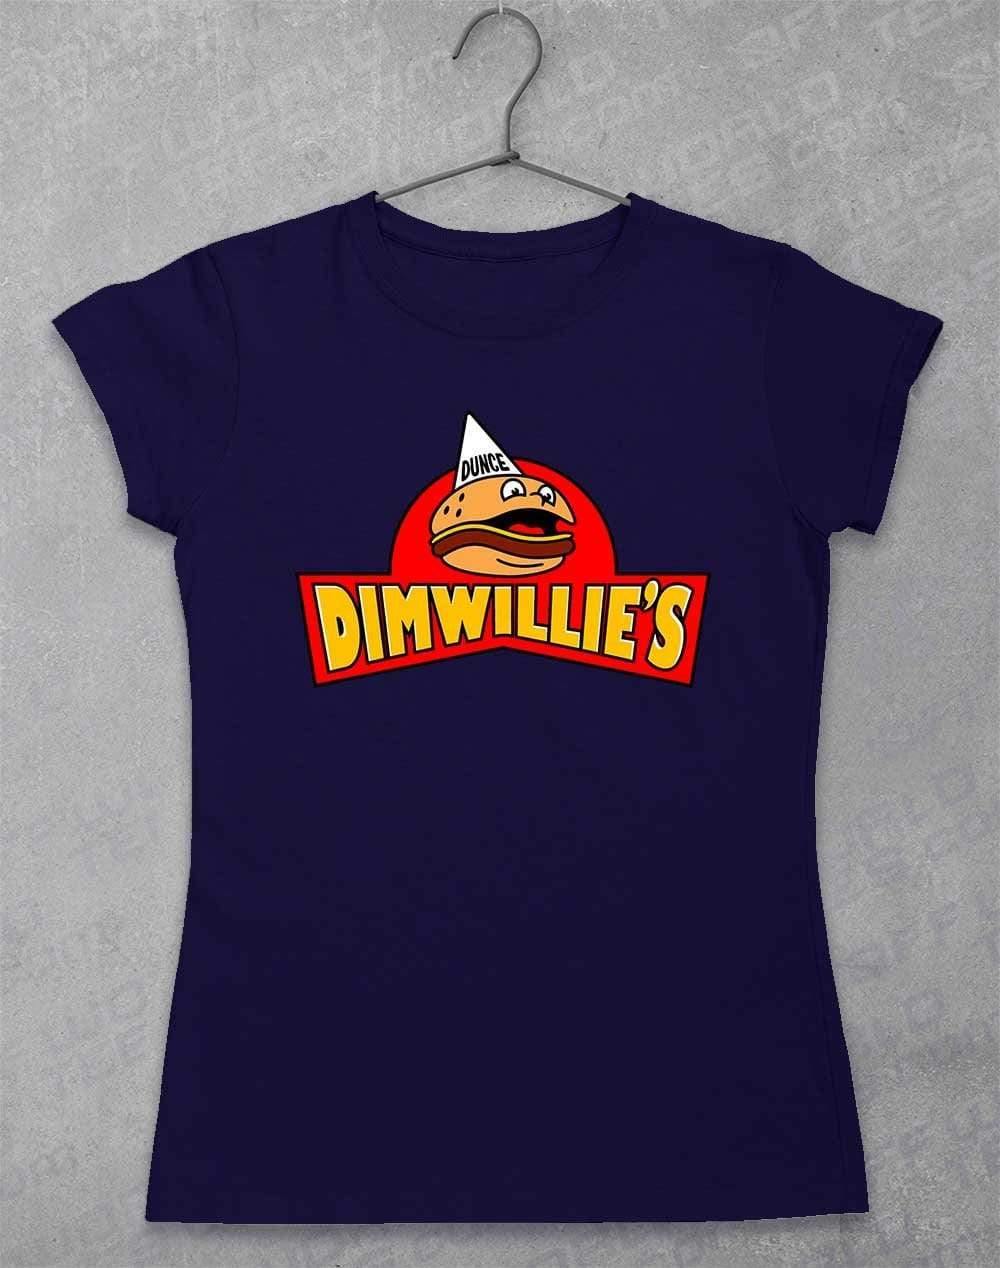 Dimwillies Womens T-Shirt 8-10 / Navy  - Off World Tees